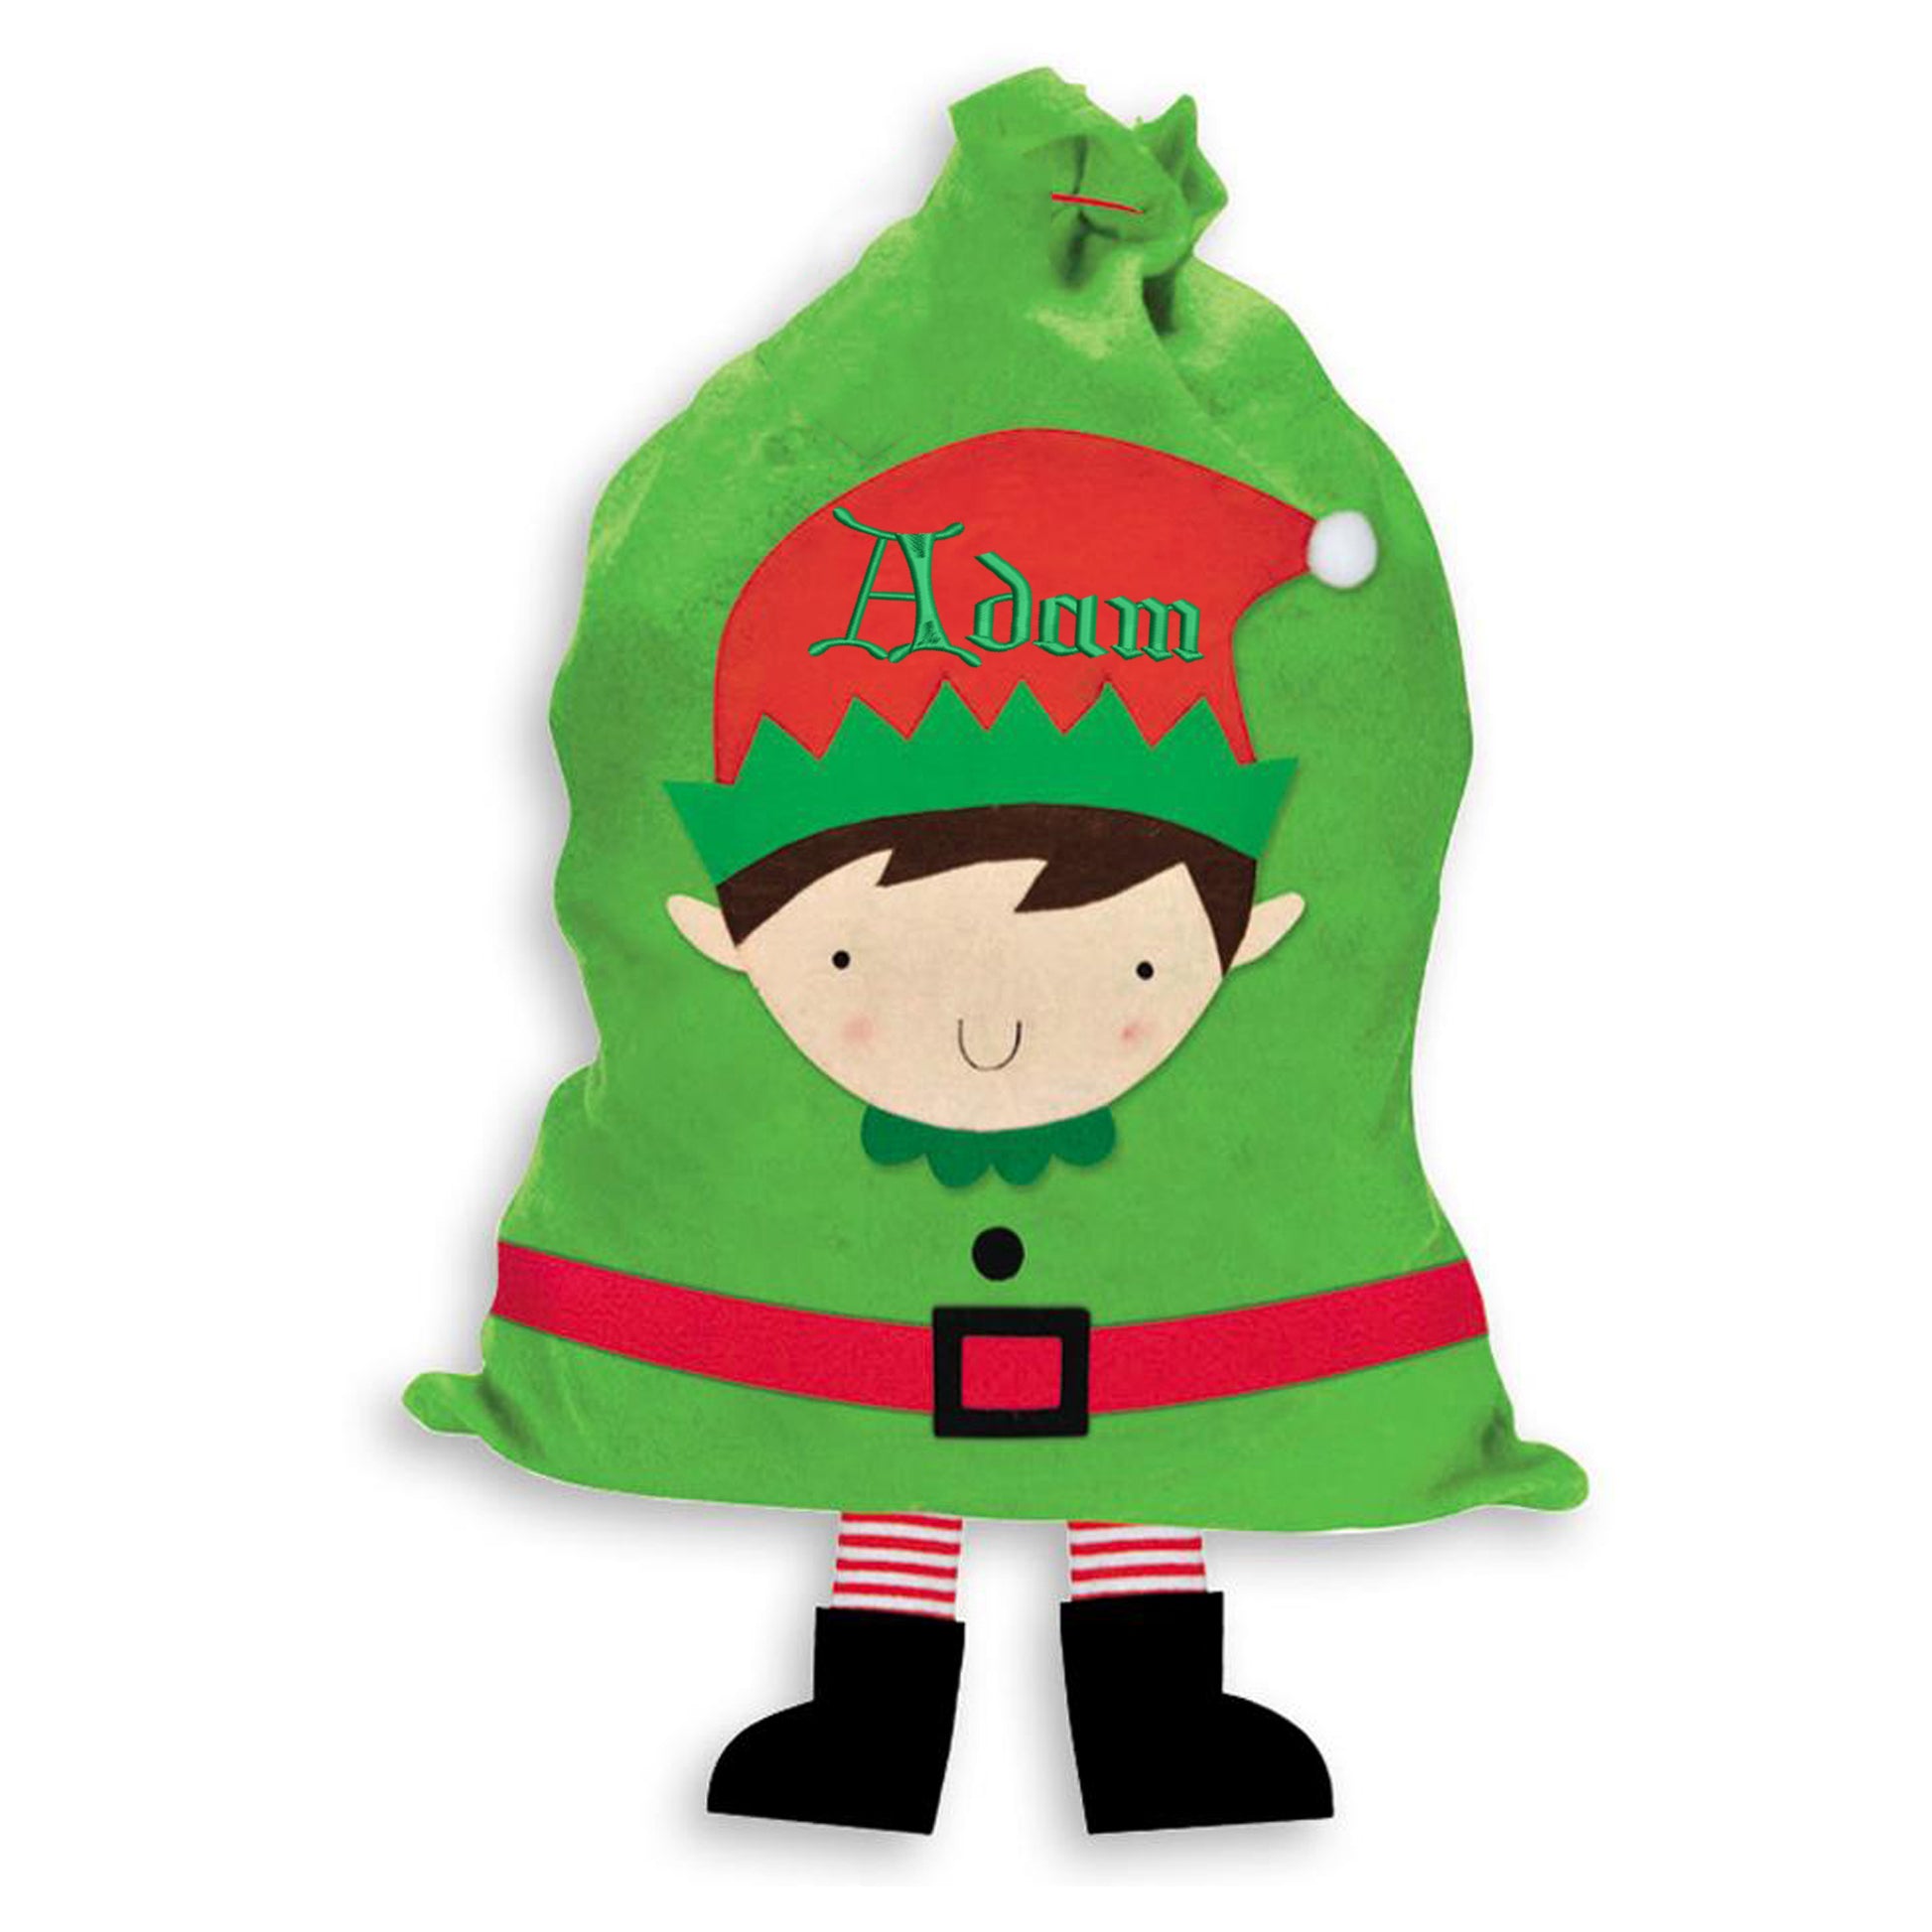 Personalised Embroidered Christmas Jumbo Stocking Sack With Legs Santa Or Elf Design  - Always Looking Good - Elf  